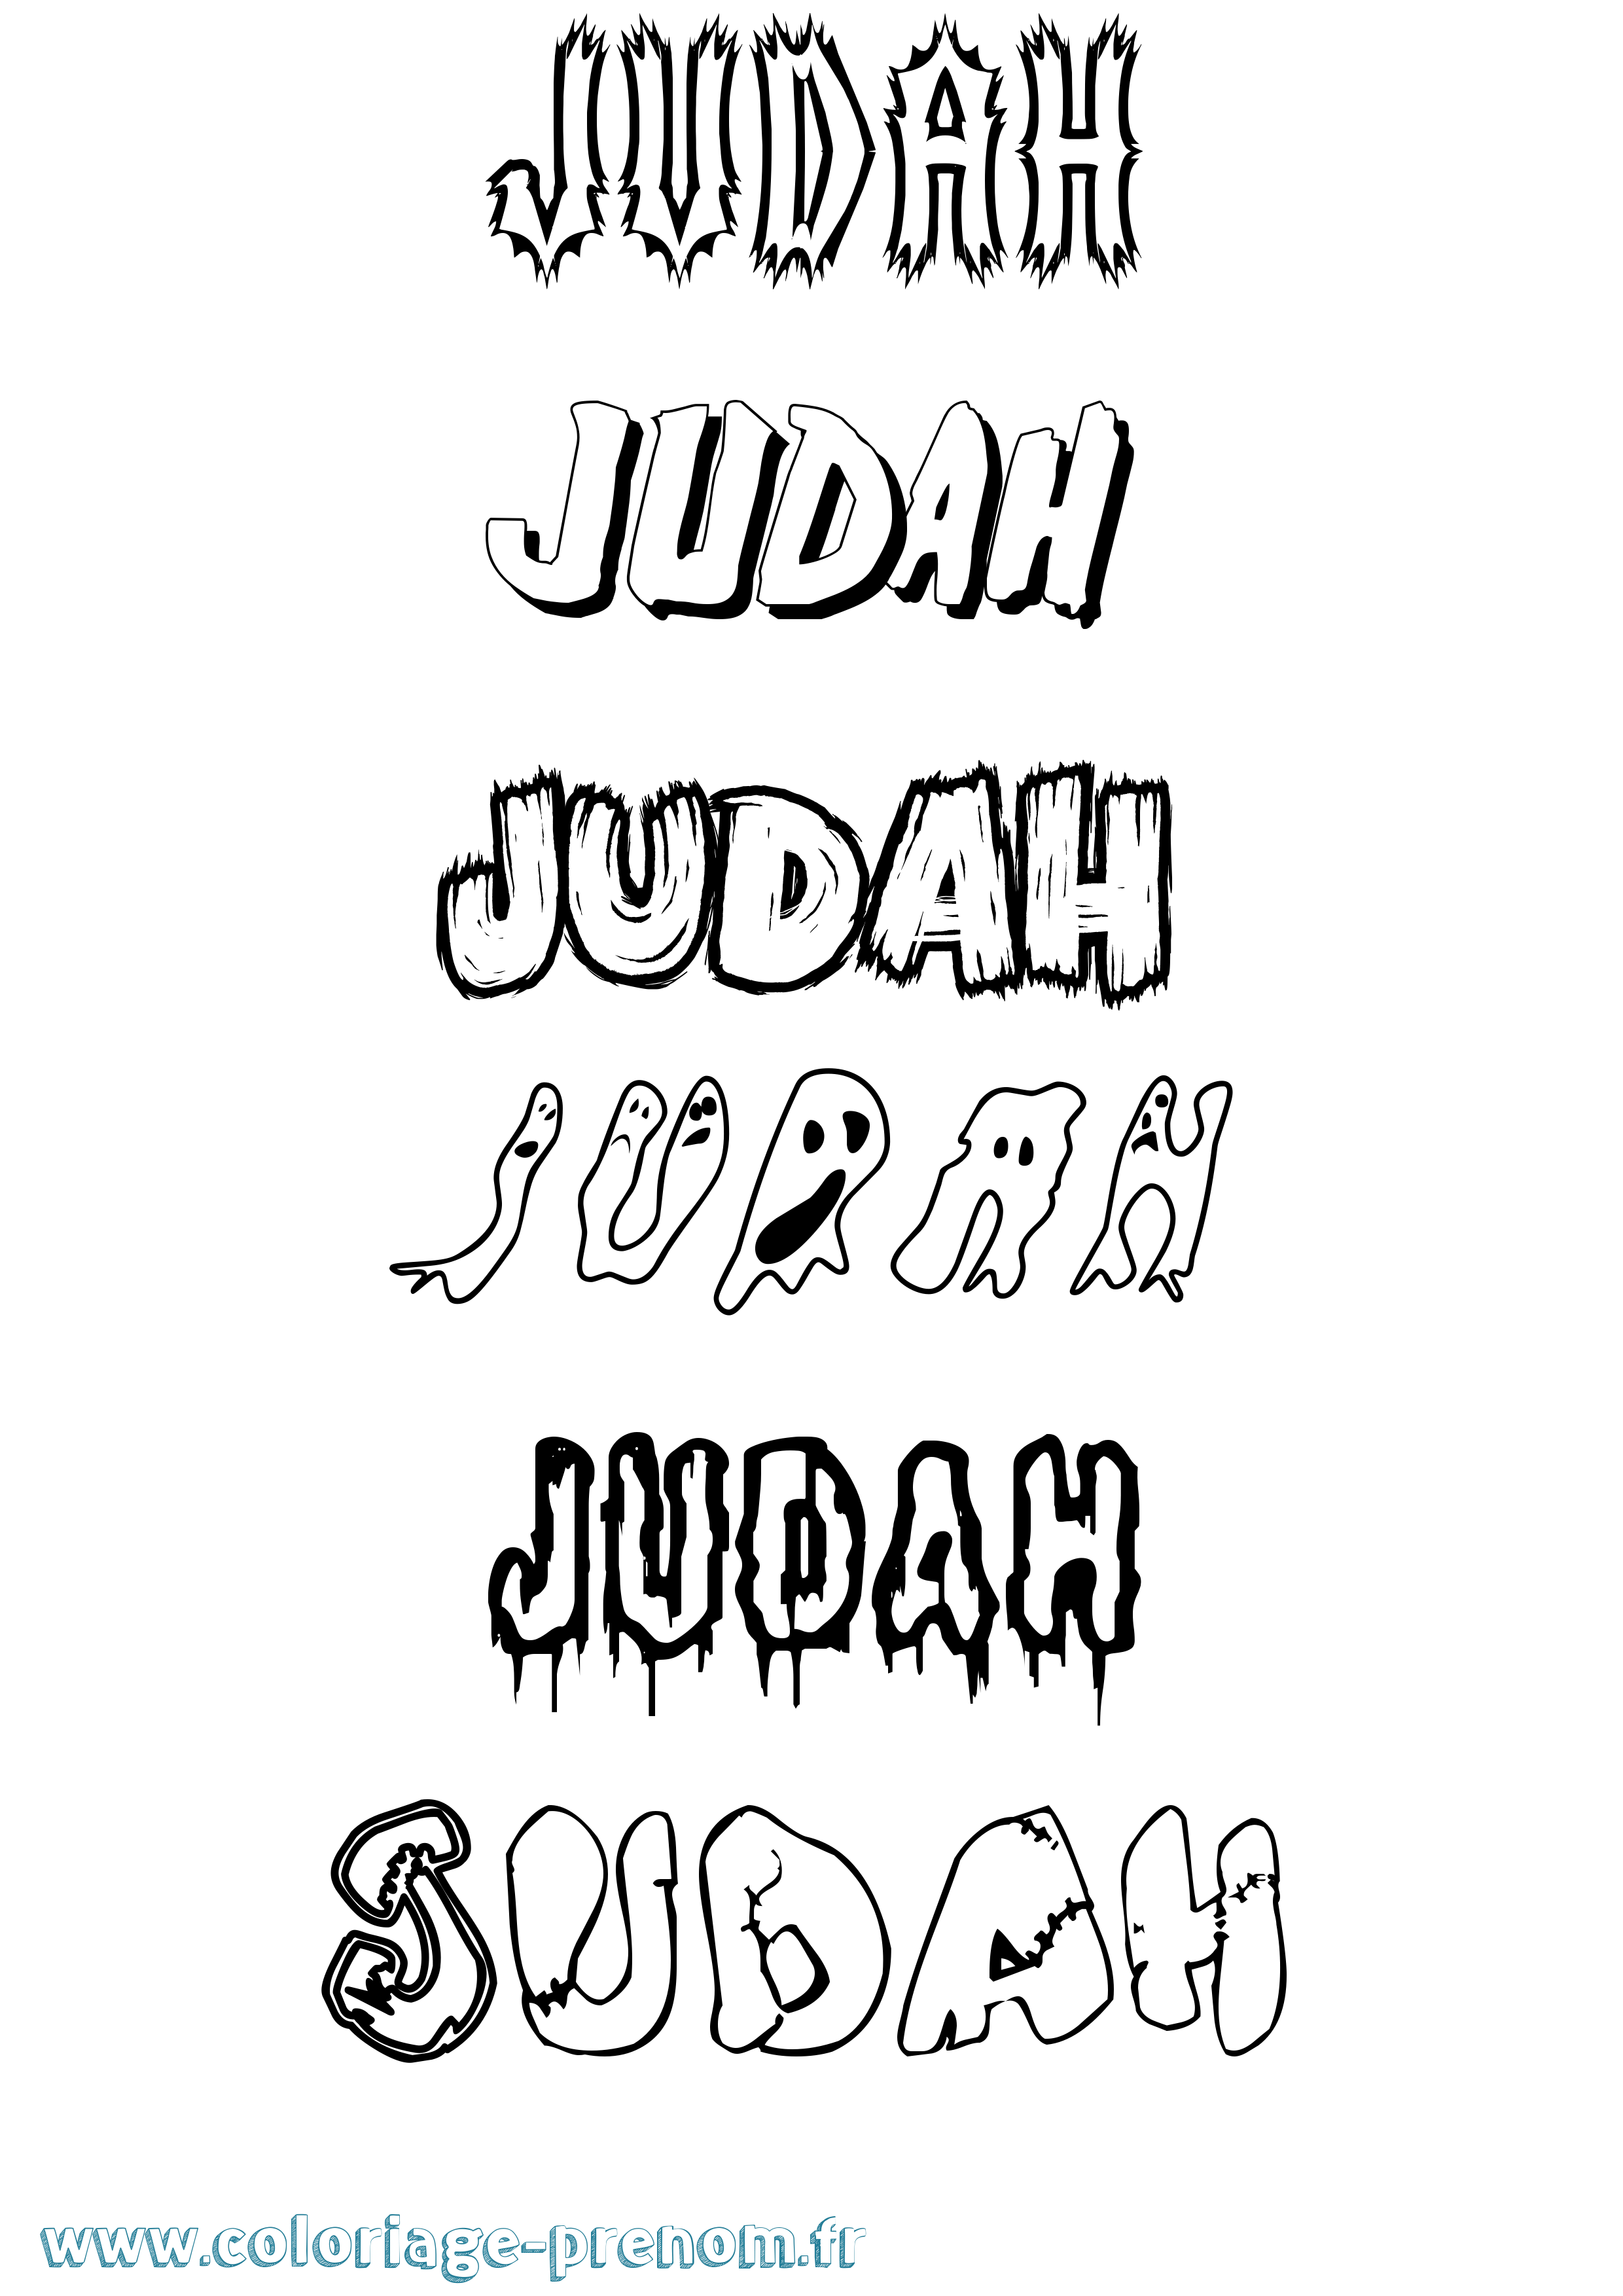 Coloriage prénom Judah Frisson